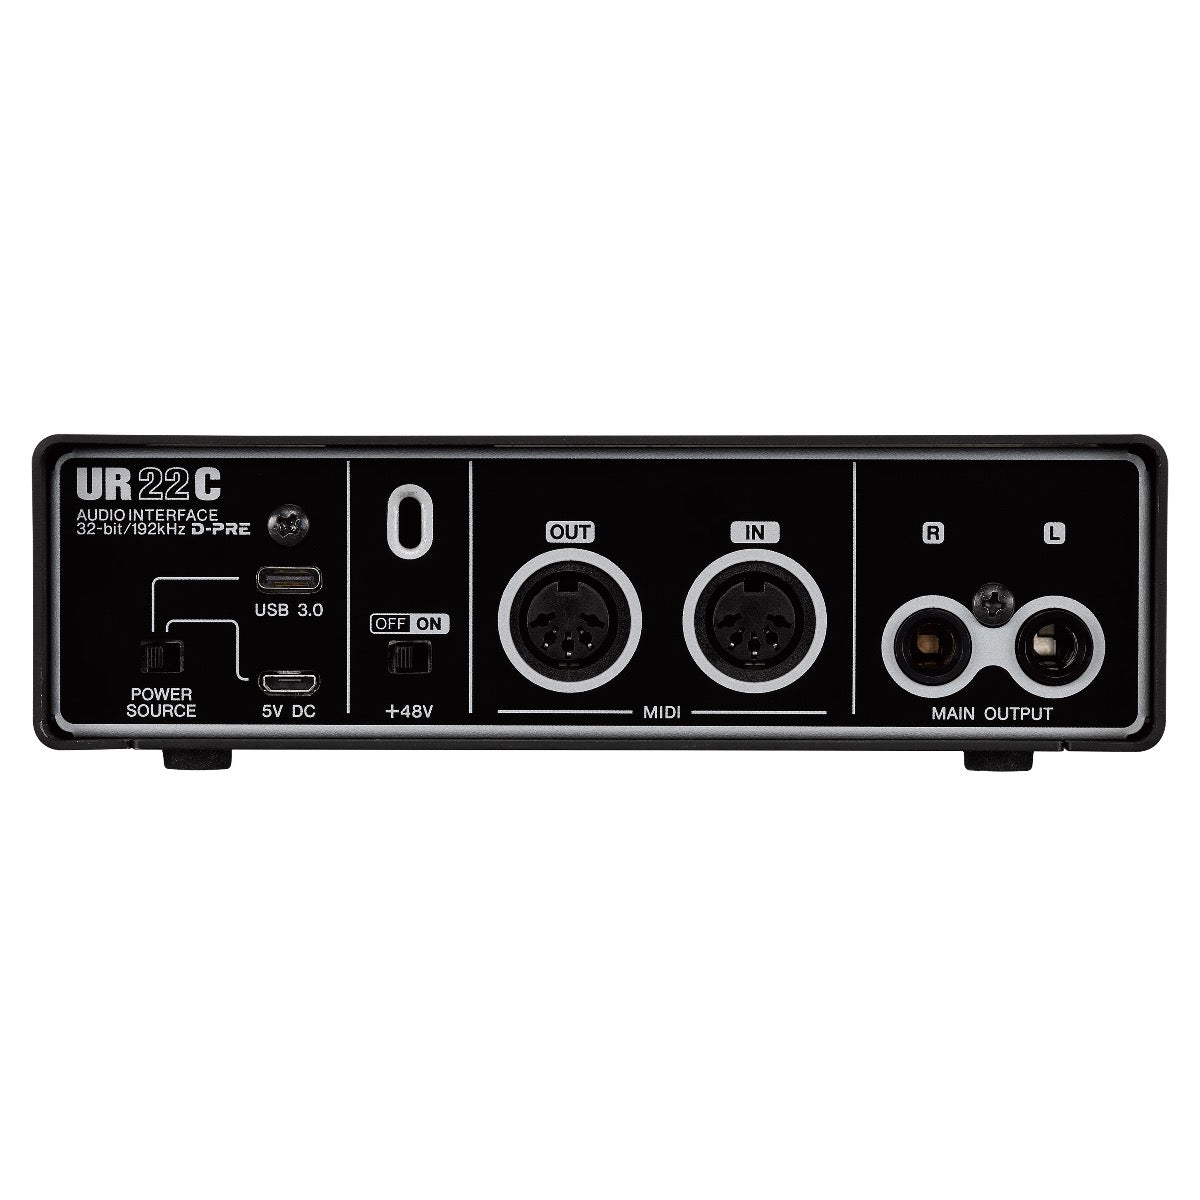 Steinberg UR22C USB Audio Interface CABLE KIT – Kraft Music